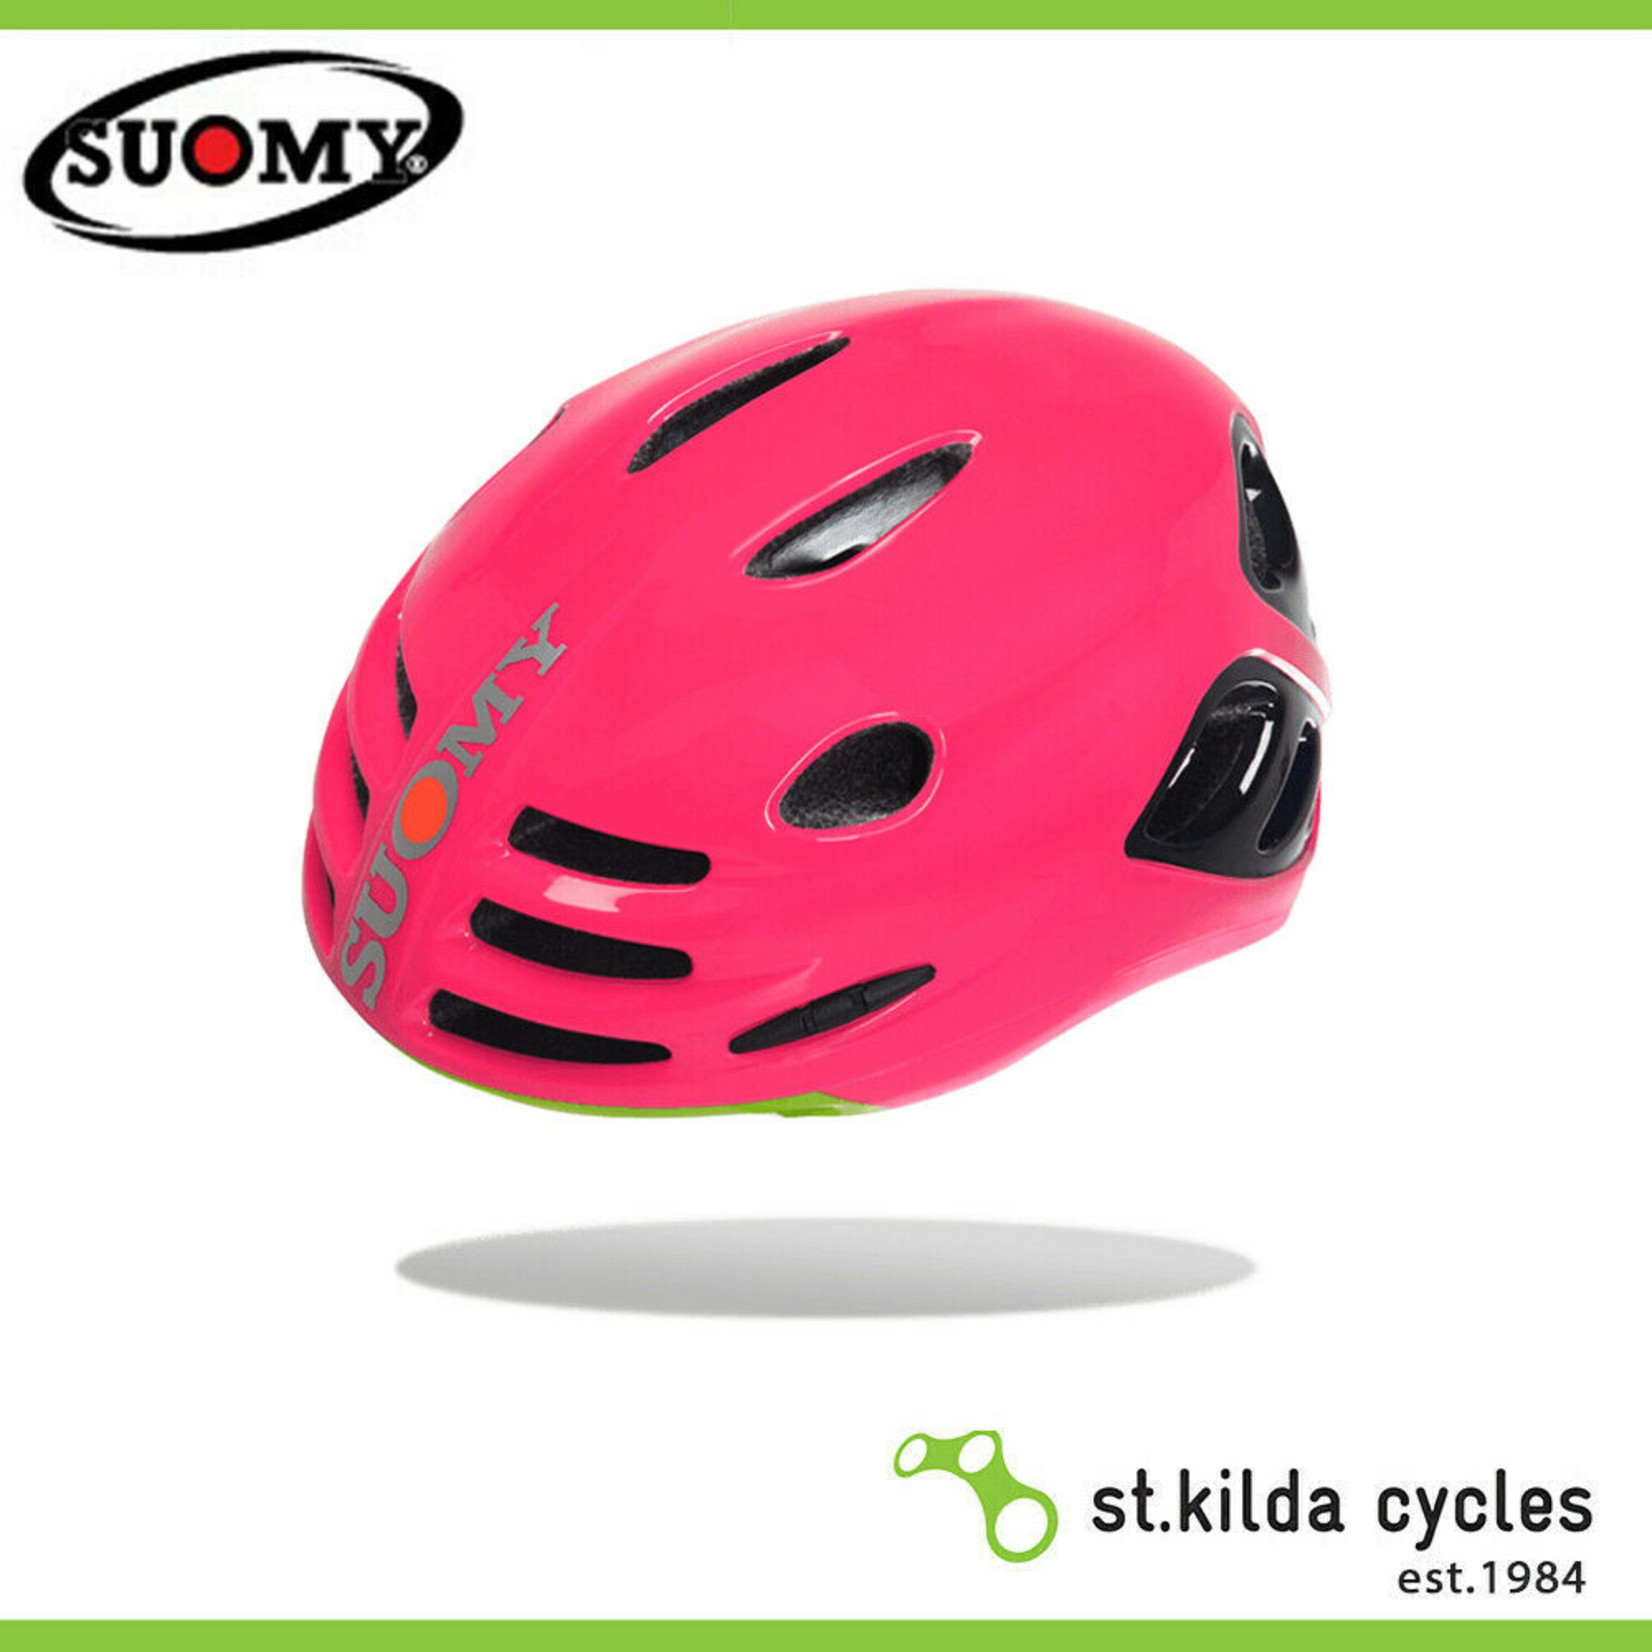 Suomy Suomy SFERA Road Helmet Team Edition - Pink Gloss - XS-M